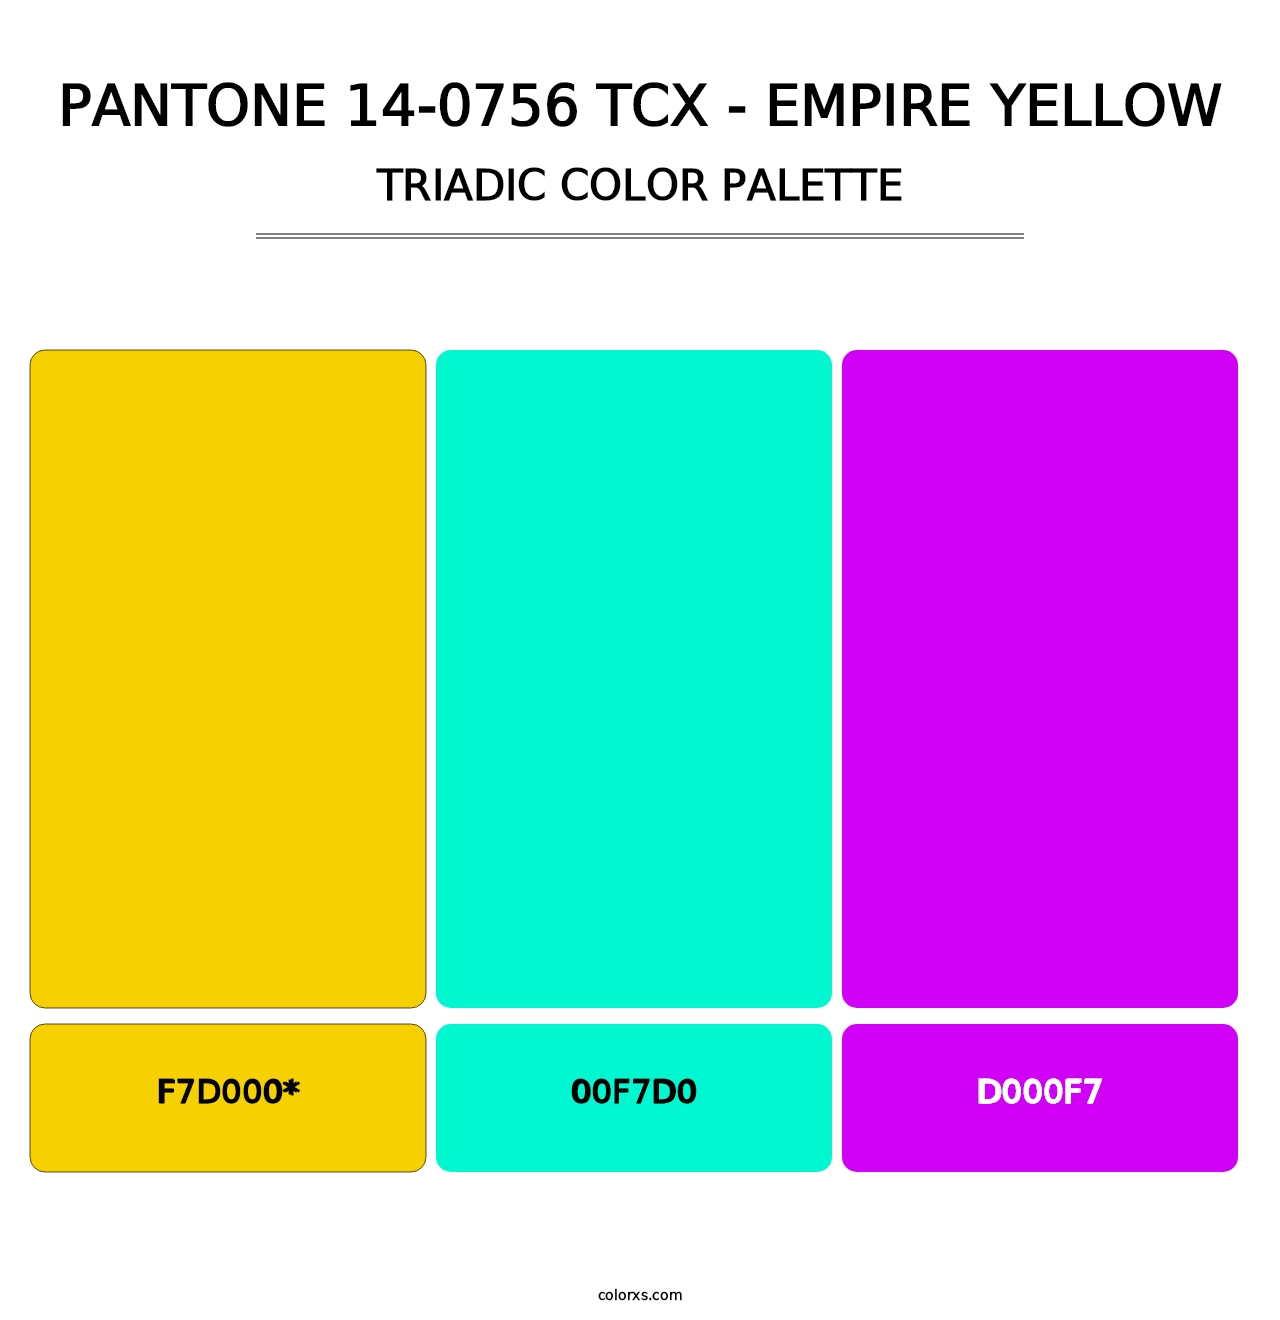 PANTONE 14-0756 TCX - Empire Yellow - Triadic Color Palette